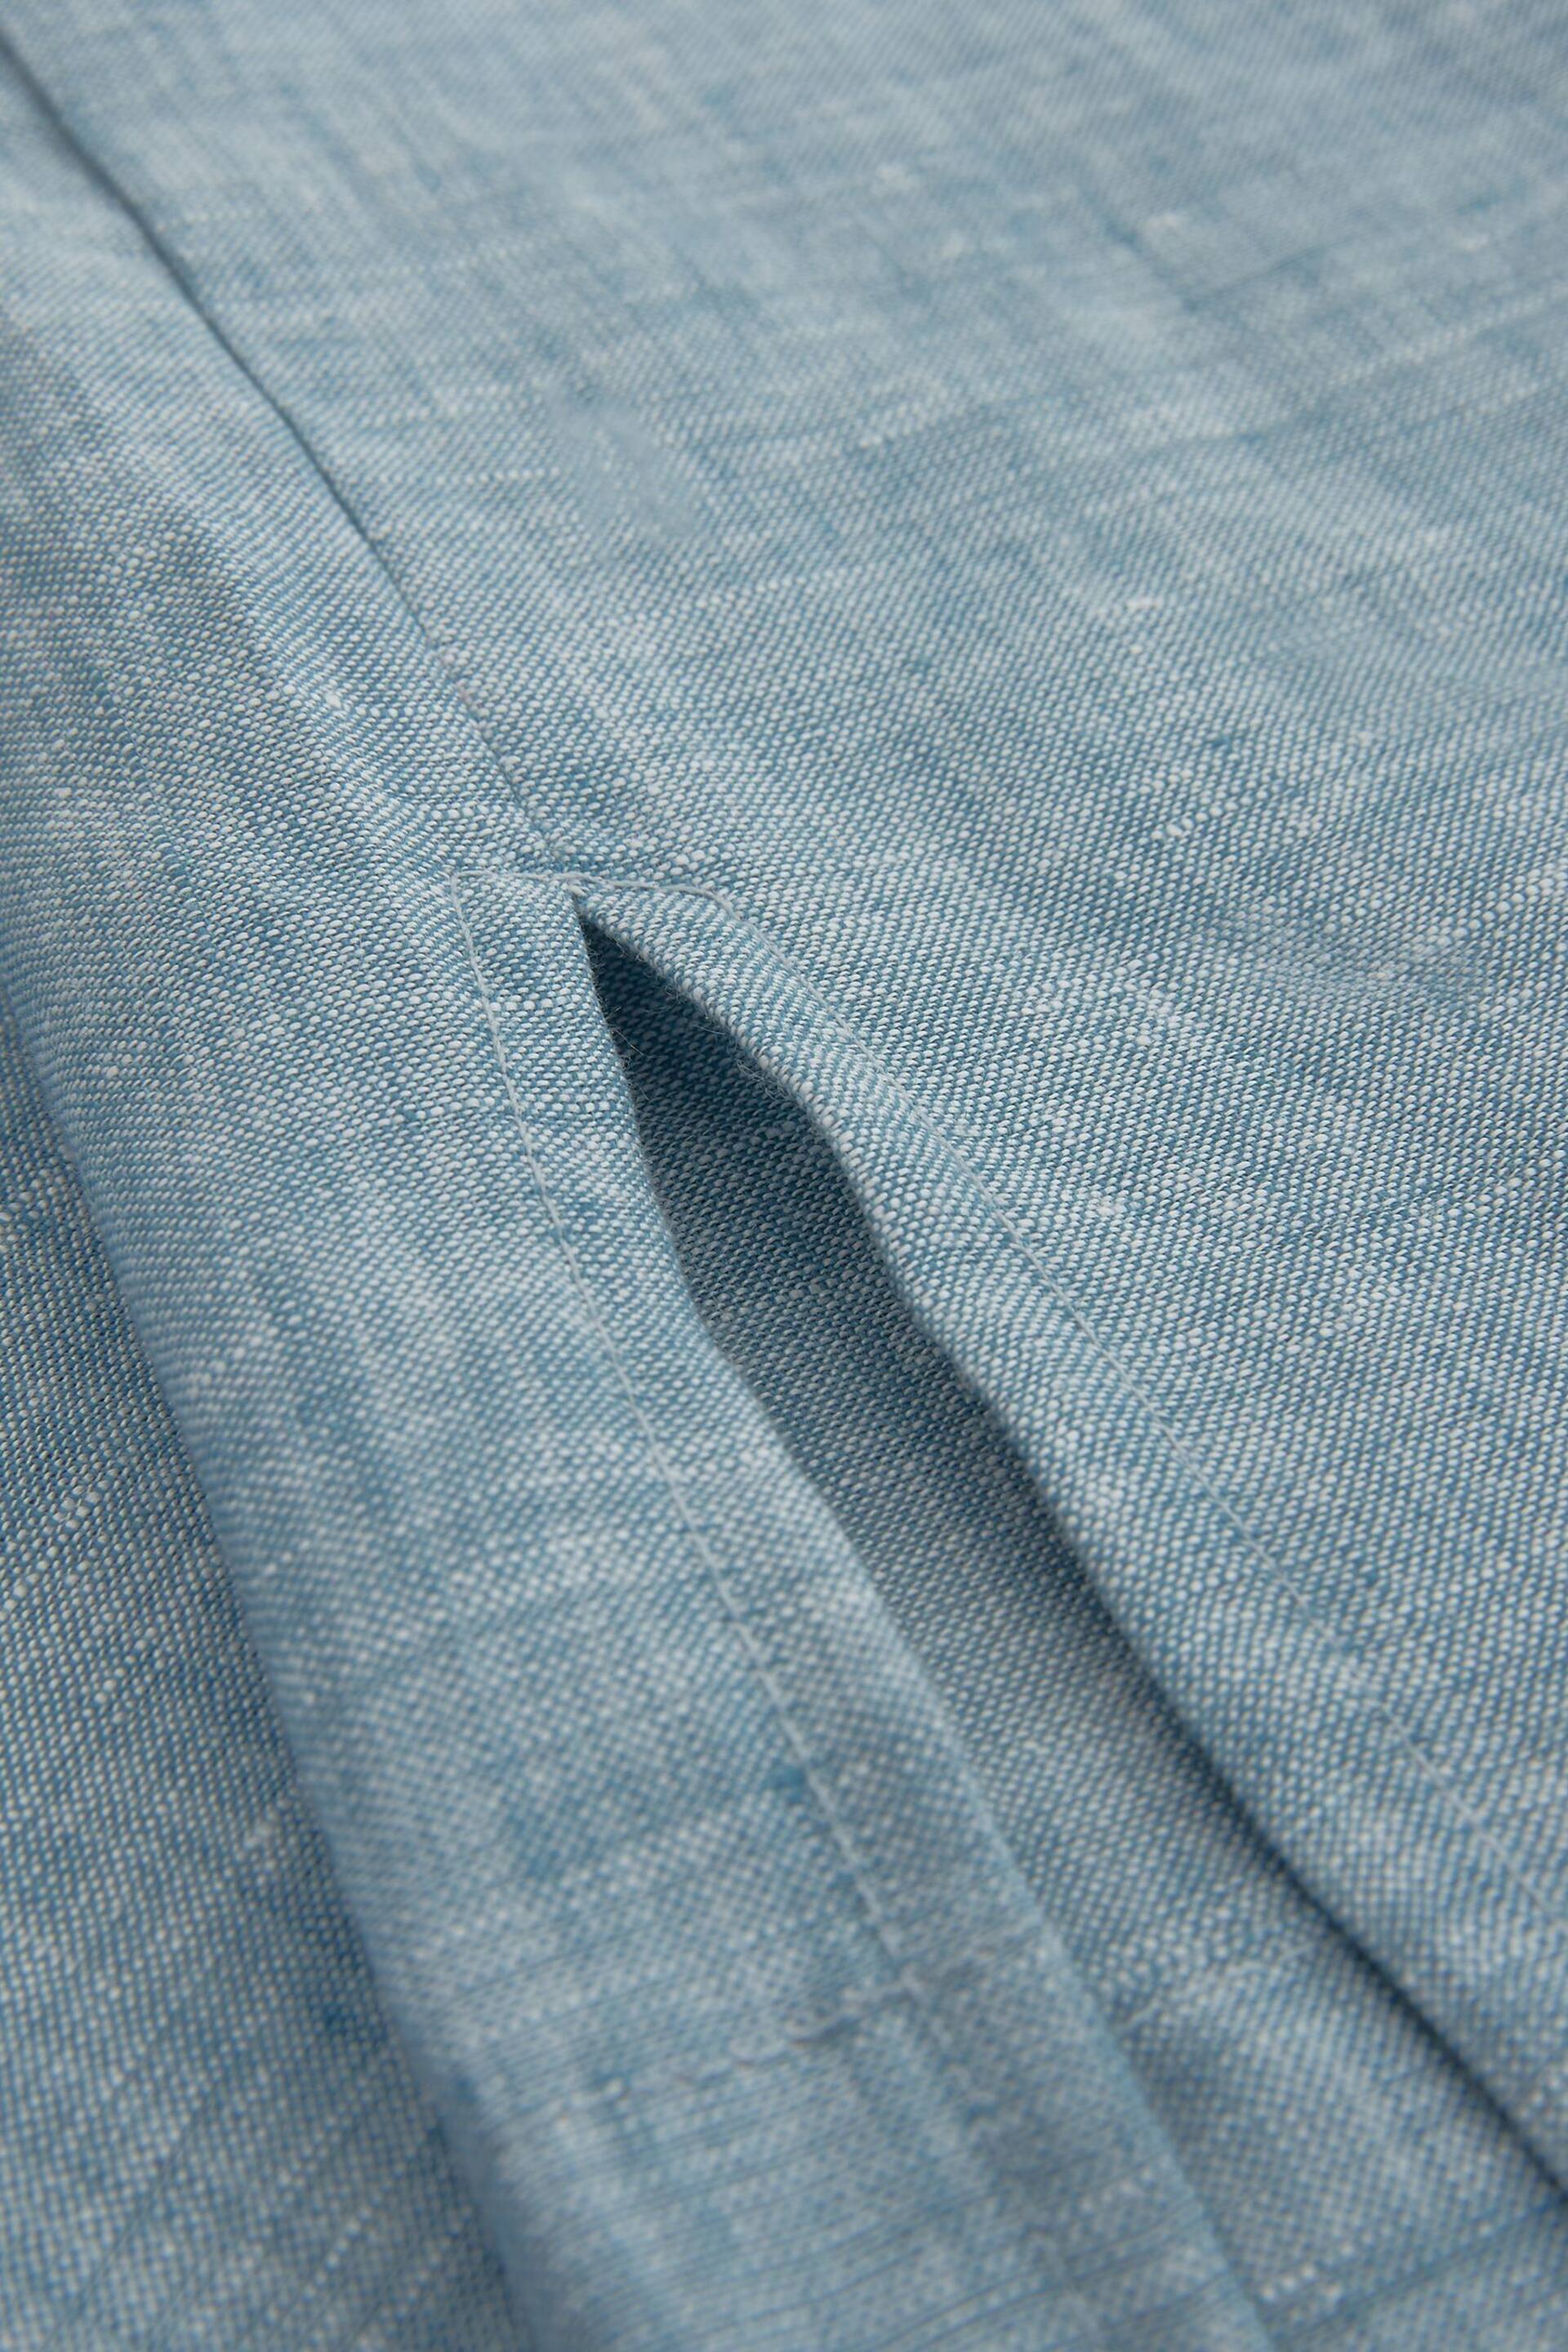 Celtic & Co. Blue Linen Sleeveless Blouse - Image 6 of 7